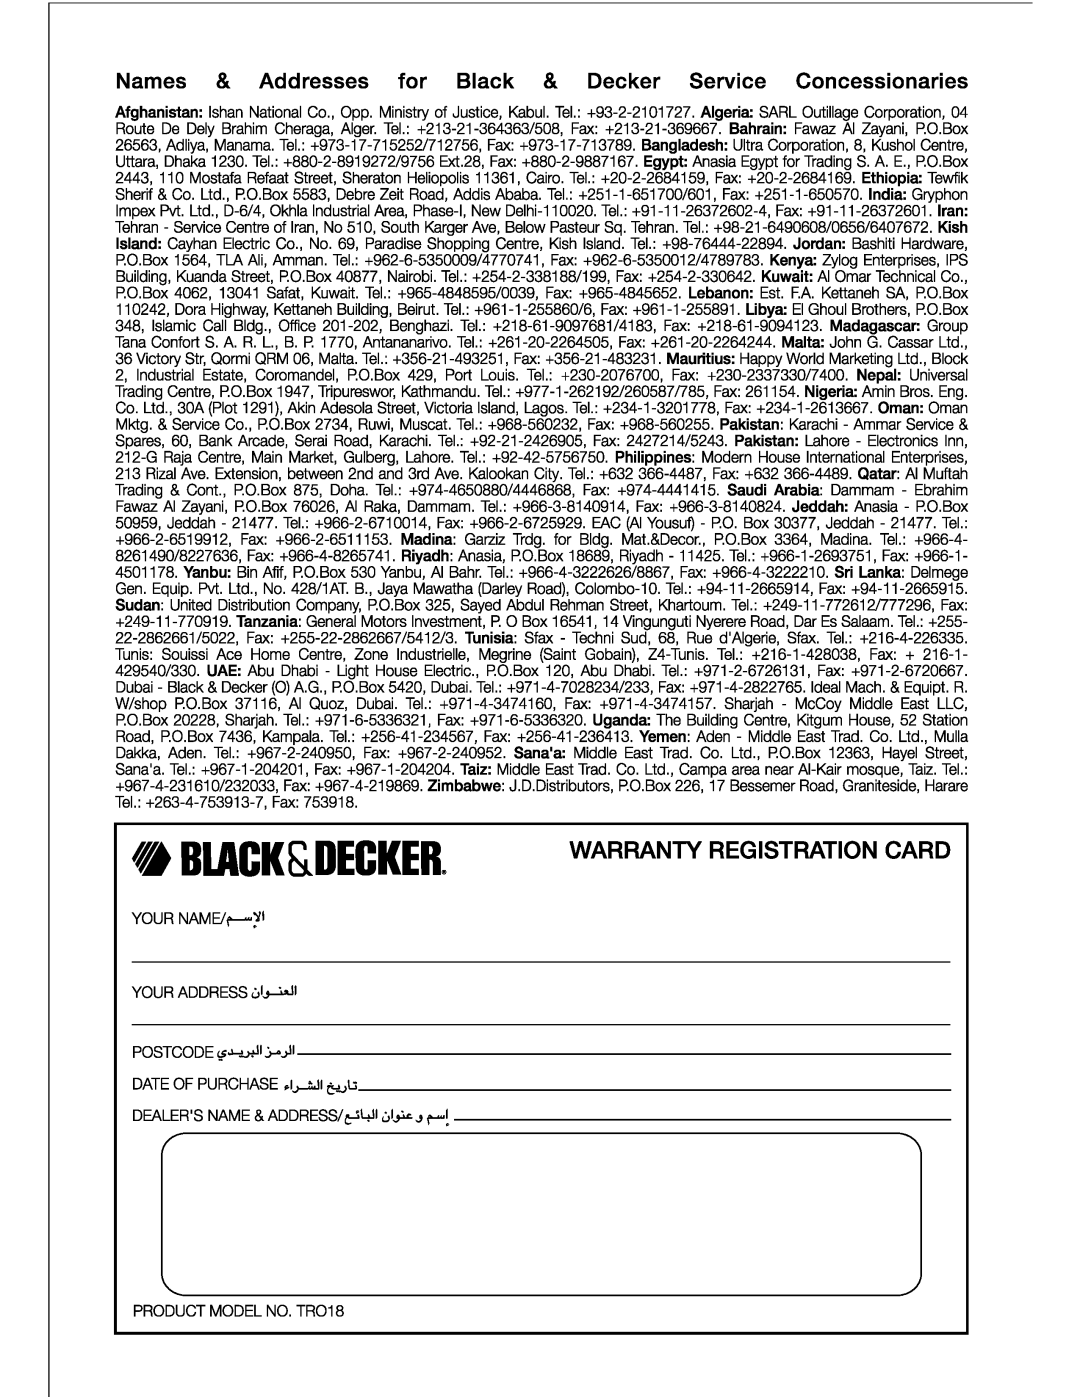 Black & Decker TRO18 manual 